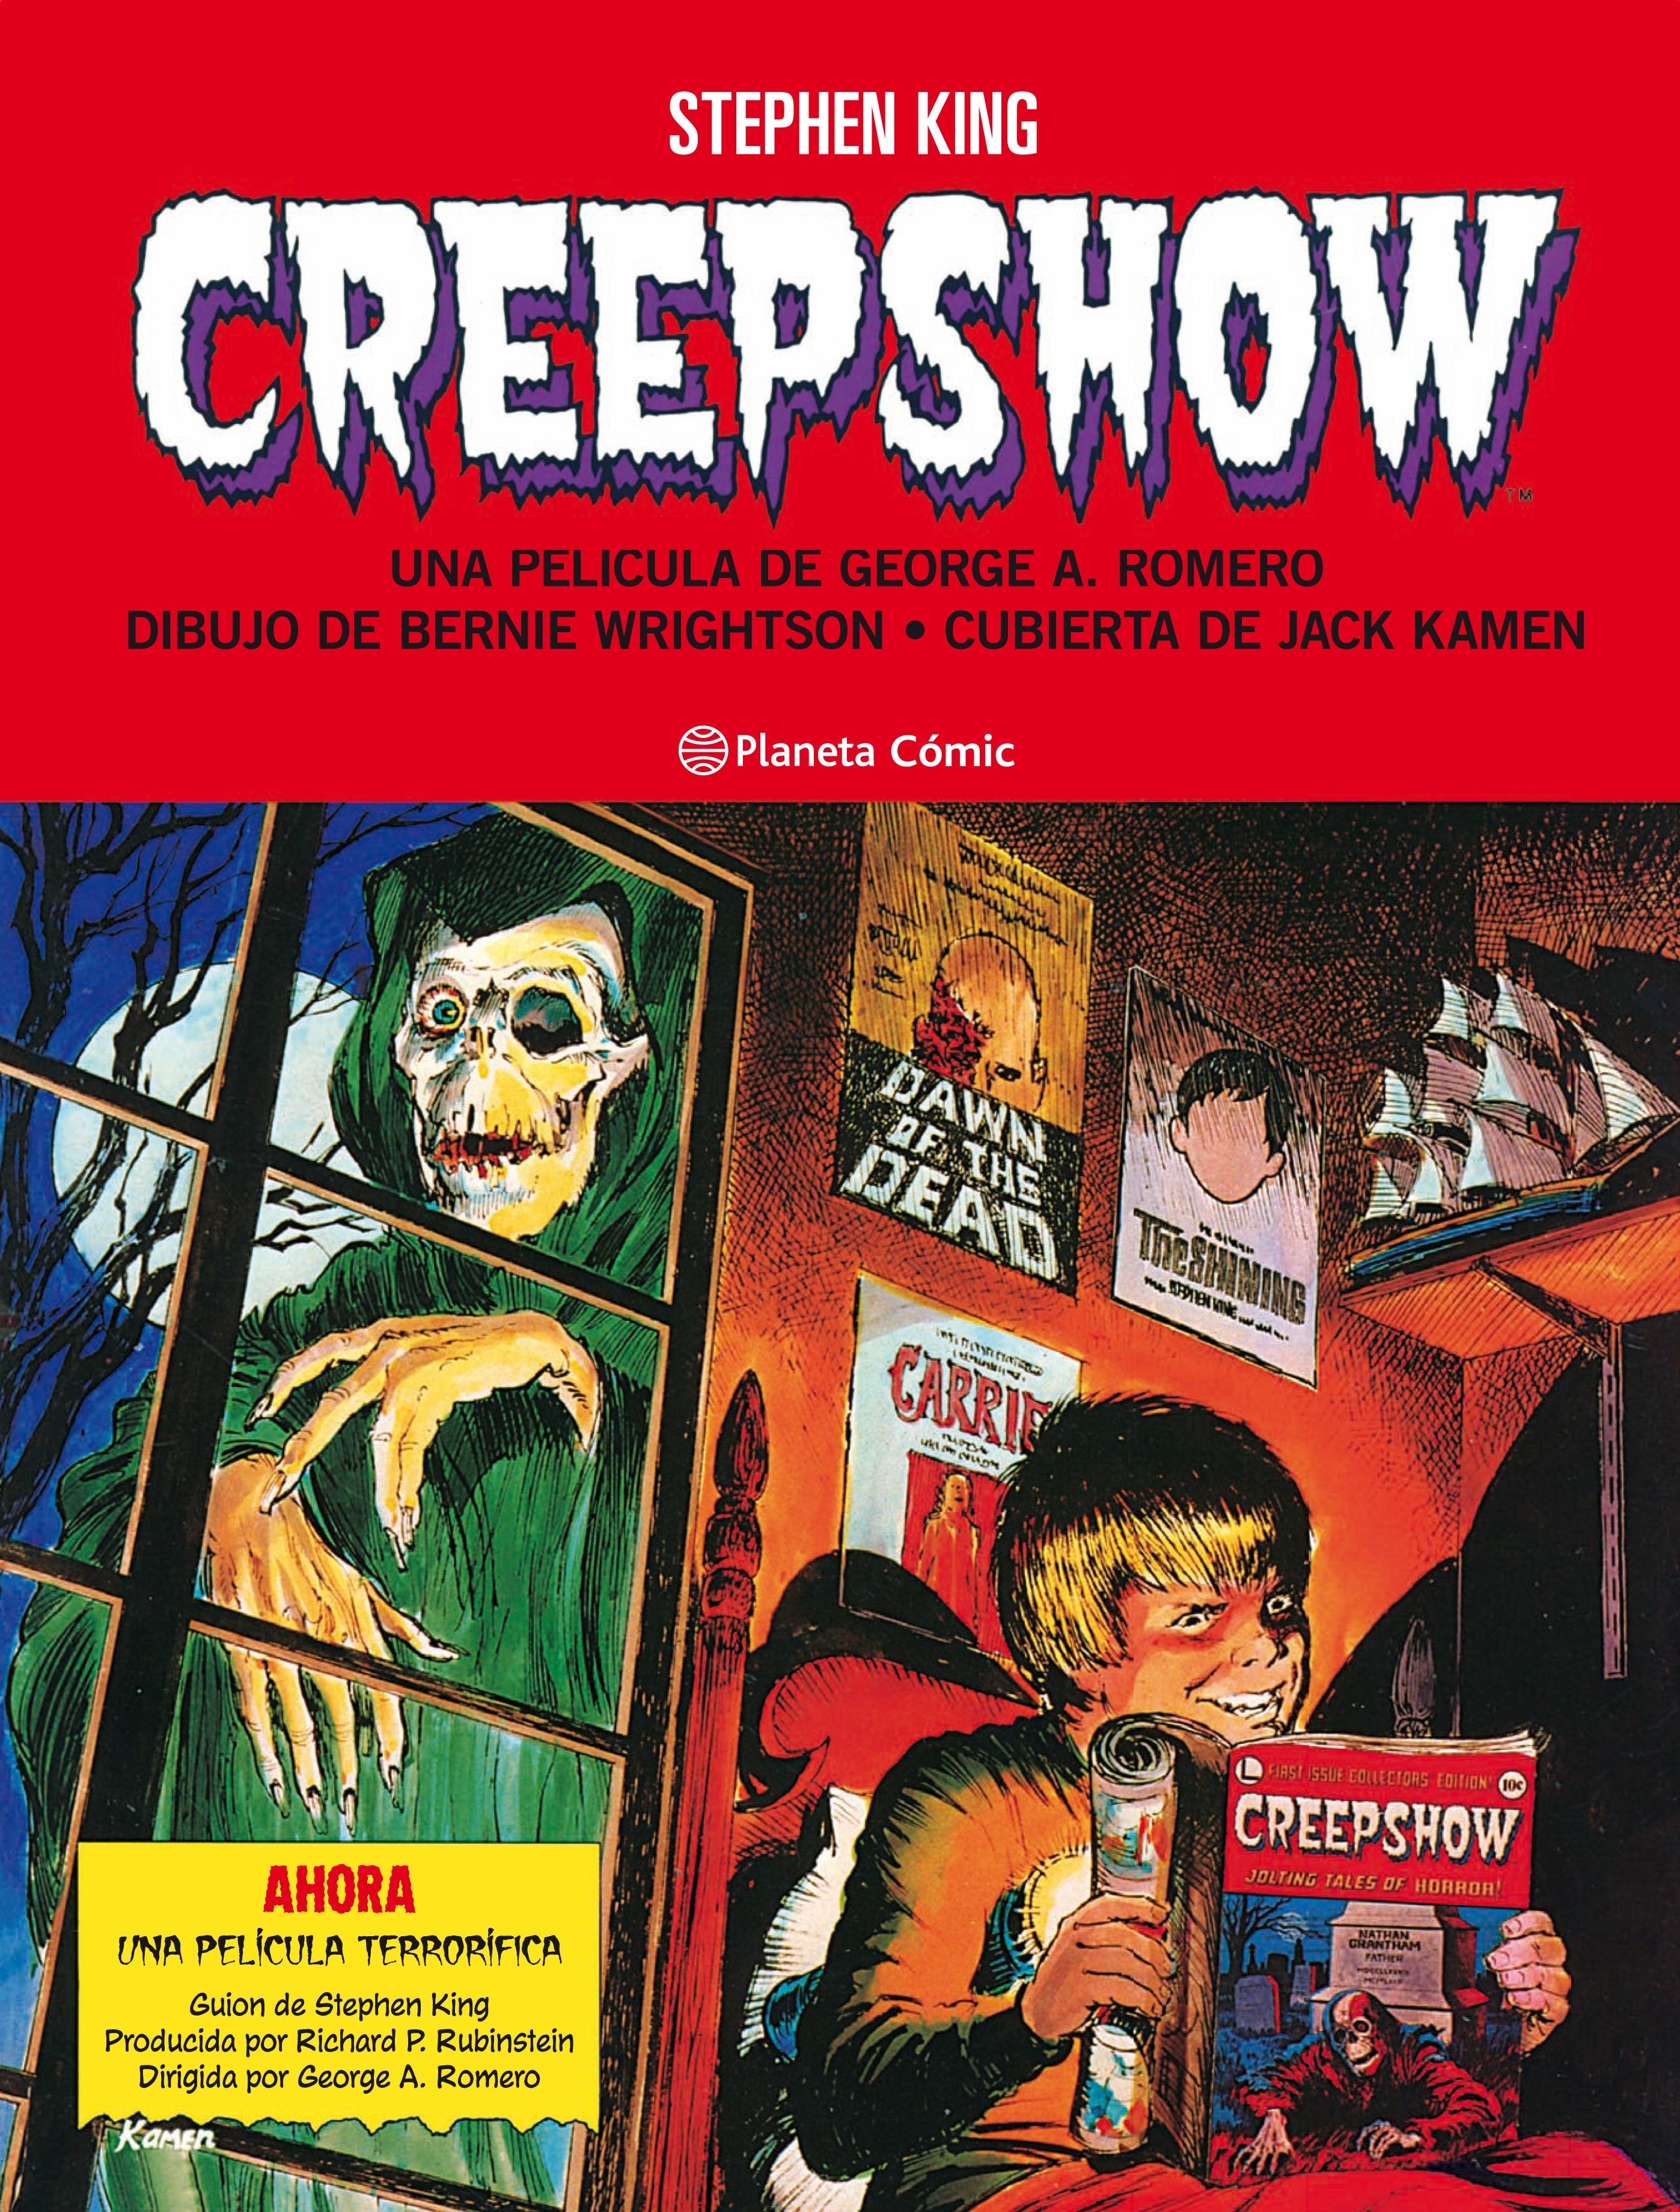 Creepshow de Stephen King y Bernie Wrightson. 